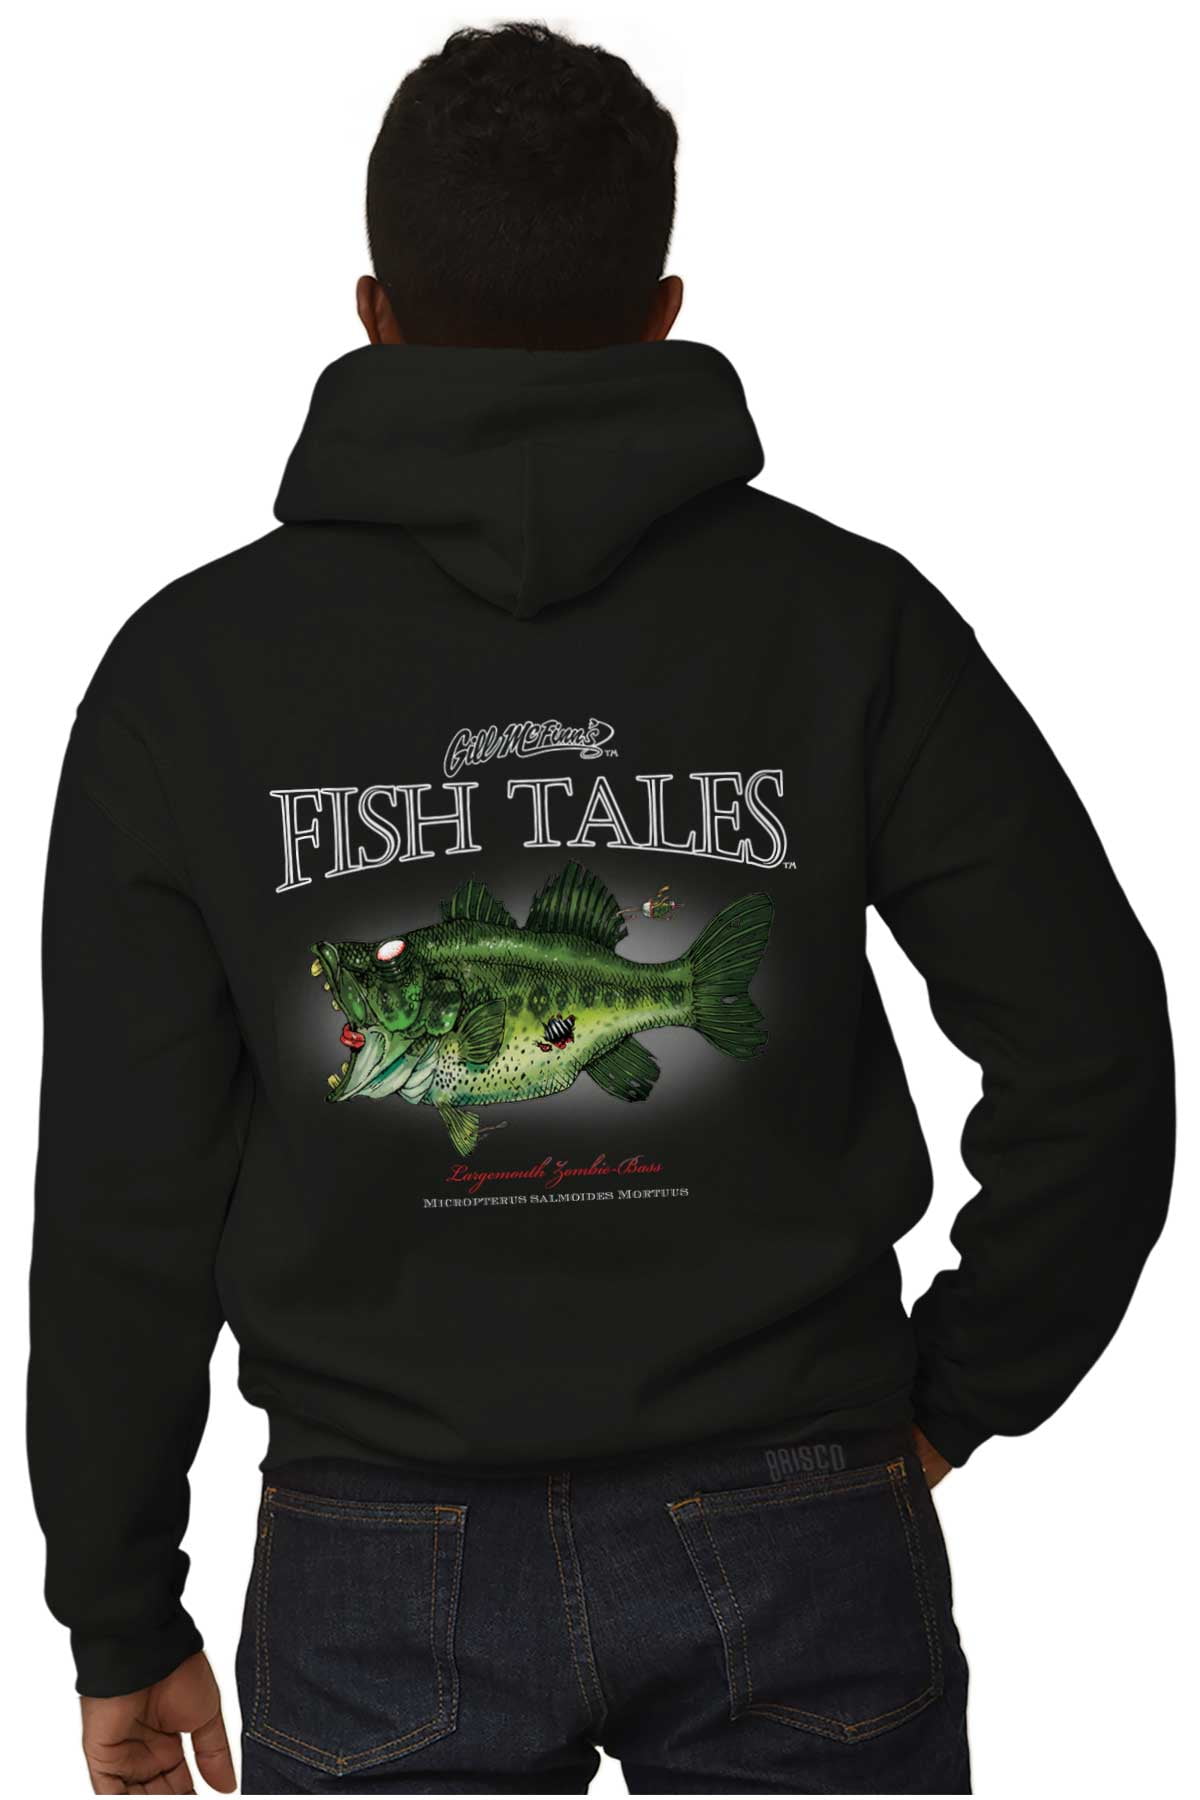 1075C Great For Fishing Lovers Hoodies Eat Sleep Fish Hooded Sweatshirt